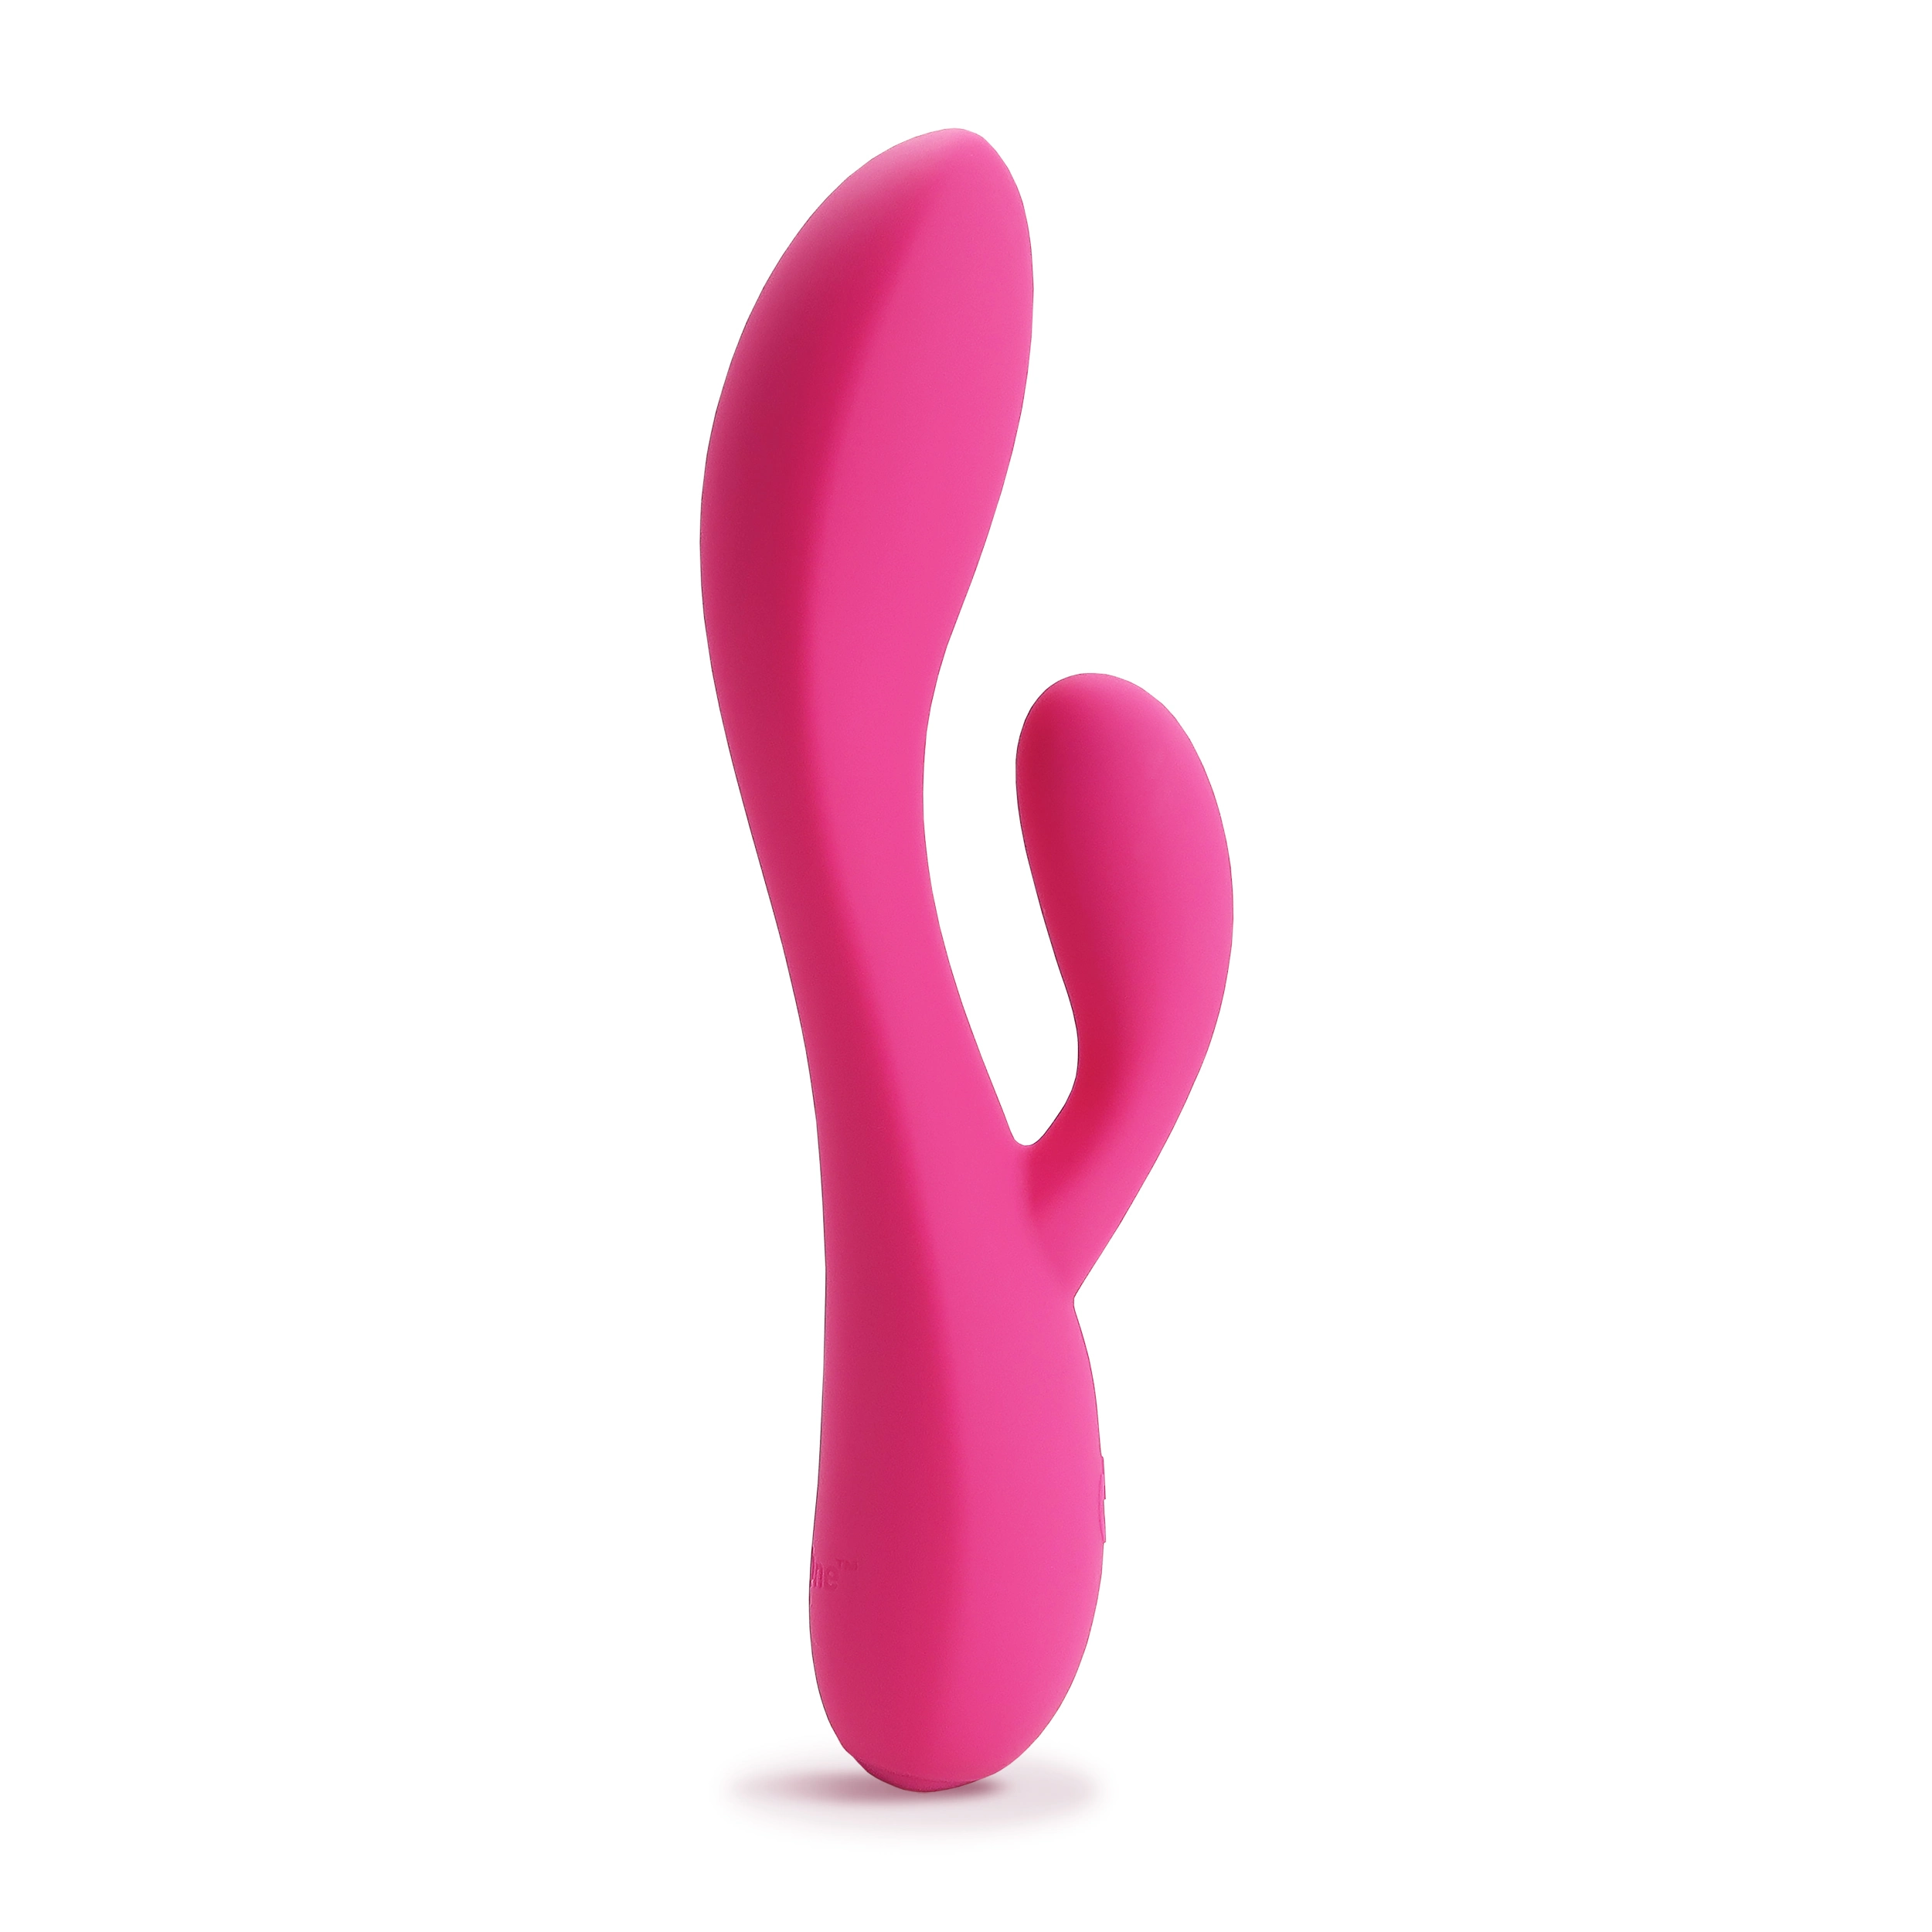 Rabbit Vibrator | Rabbit Sex Toy | plusOne®